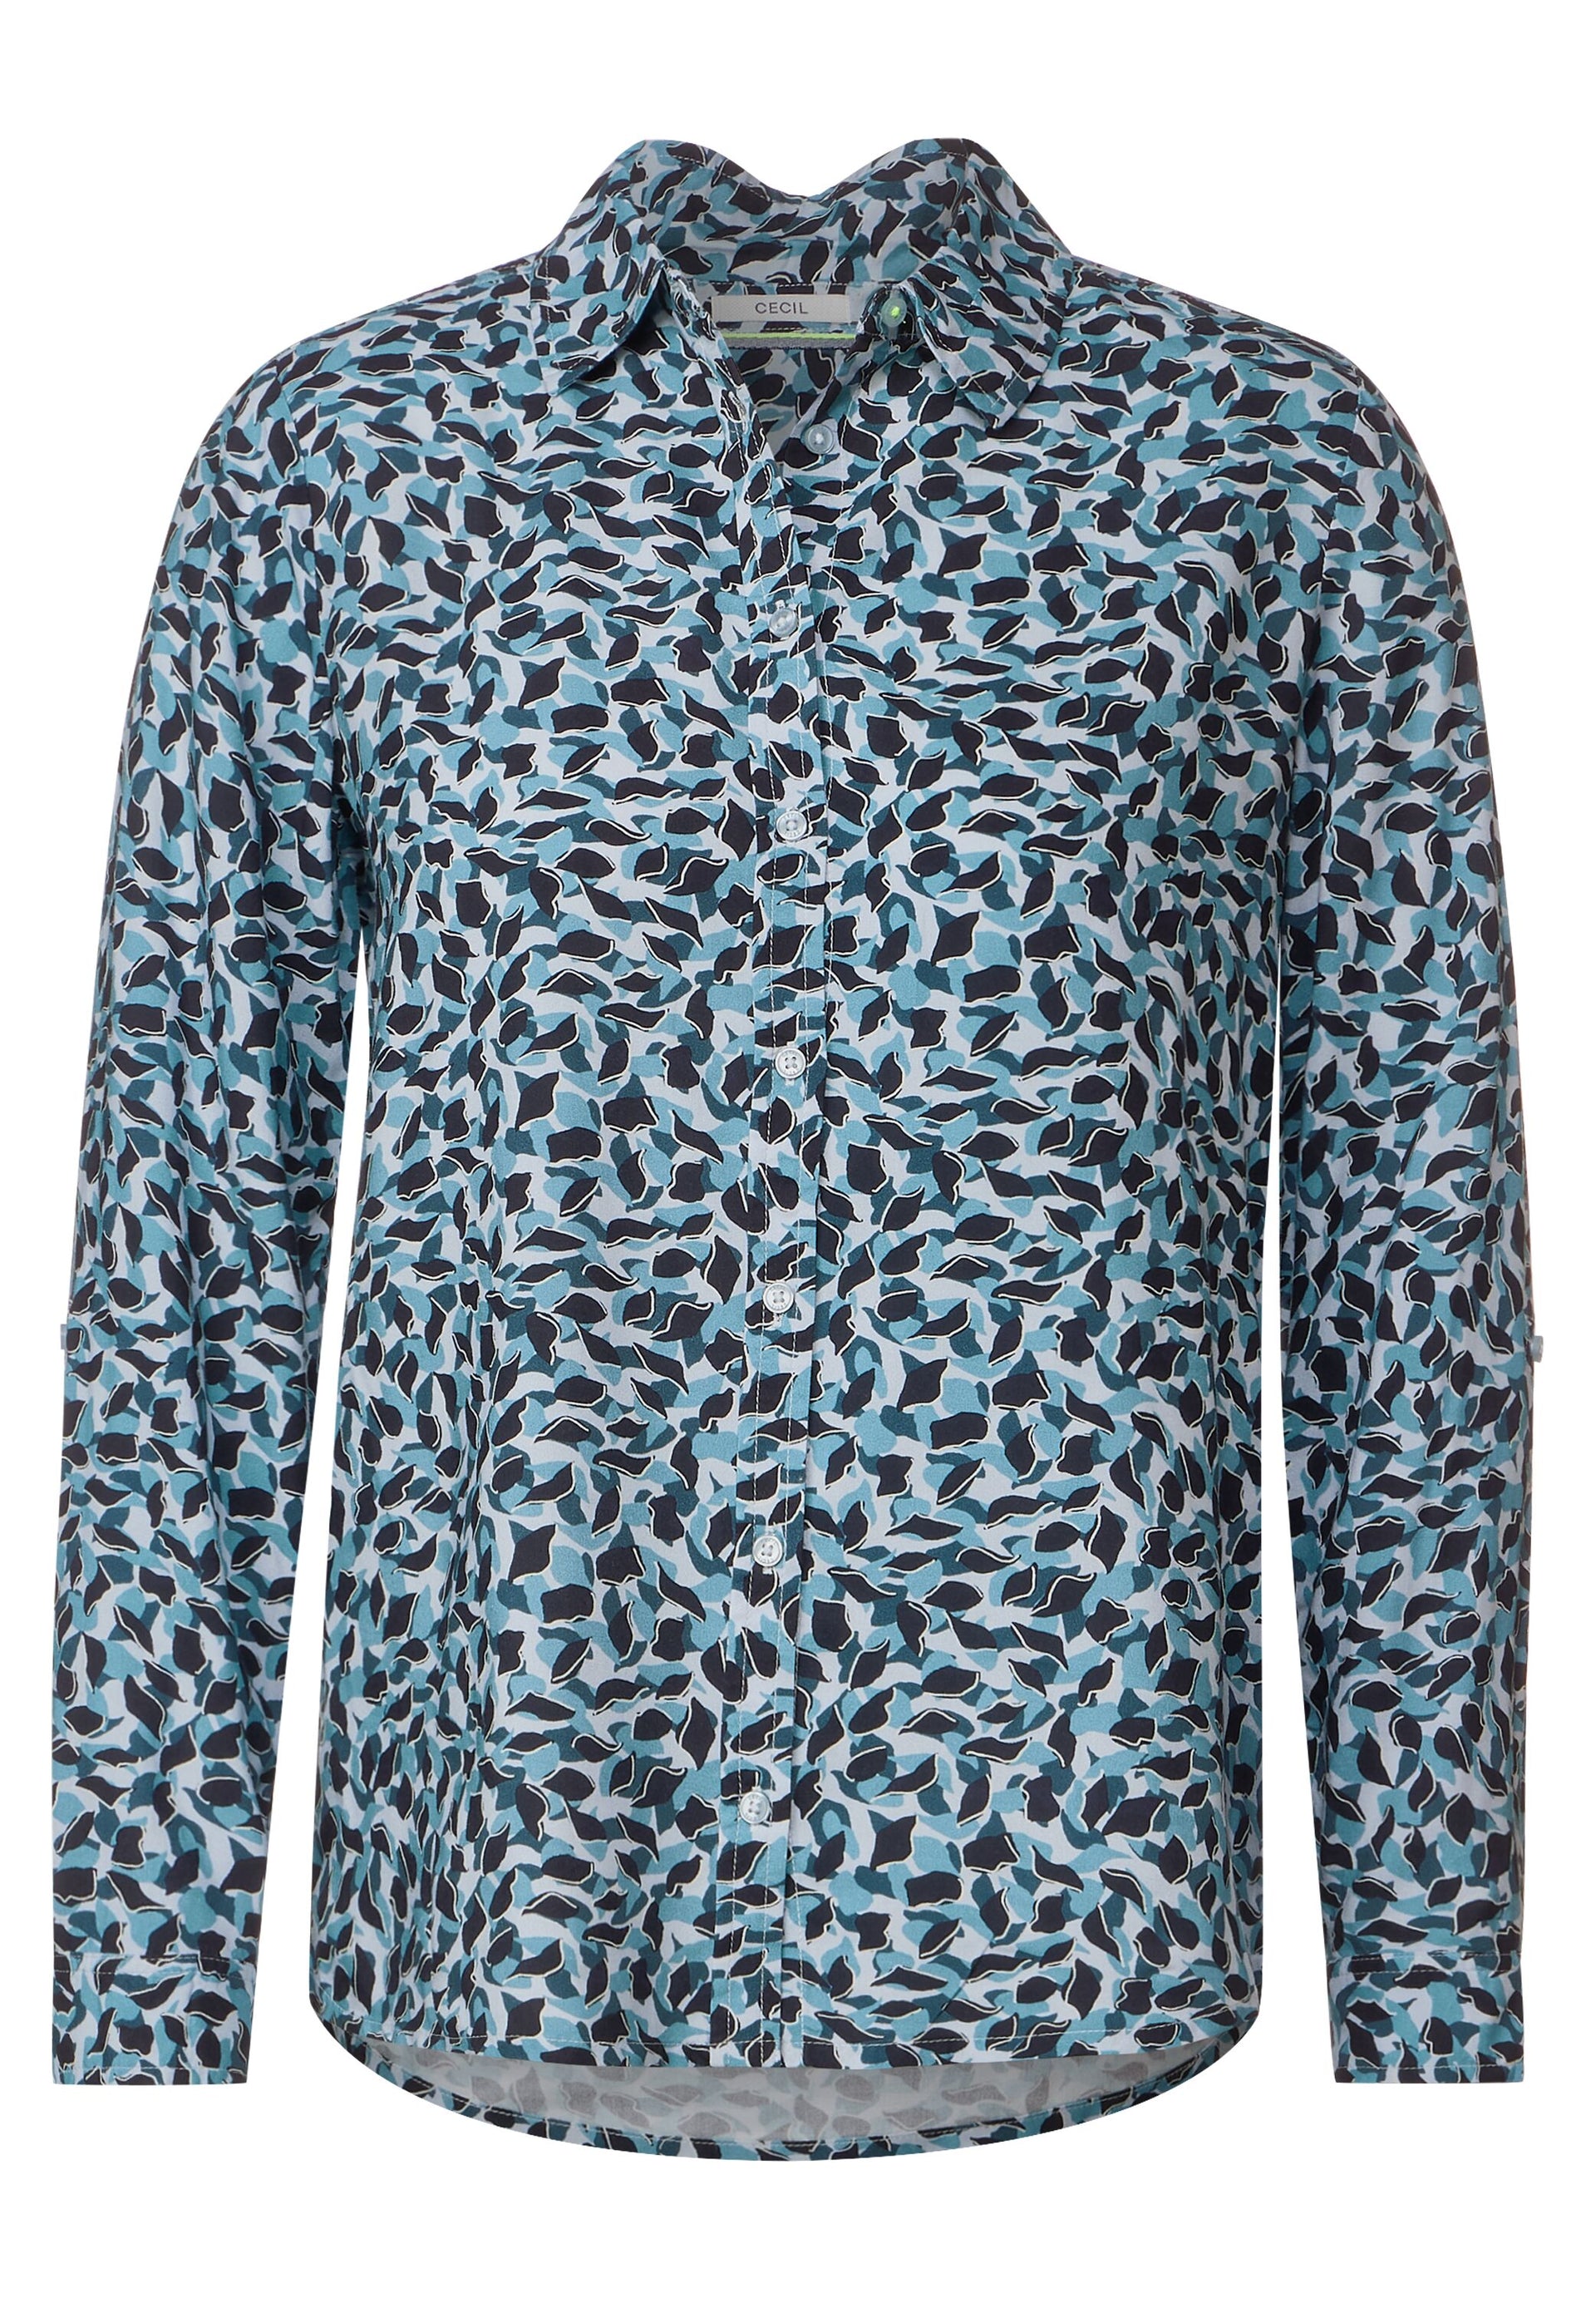 CECIL - Bluse mit grafischem Print - Farbe: strong petrol blue – TWISTY Mode | Kapuzenshirts